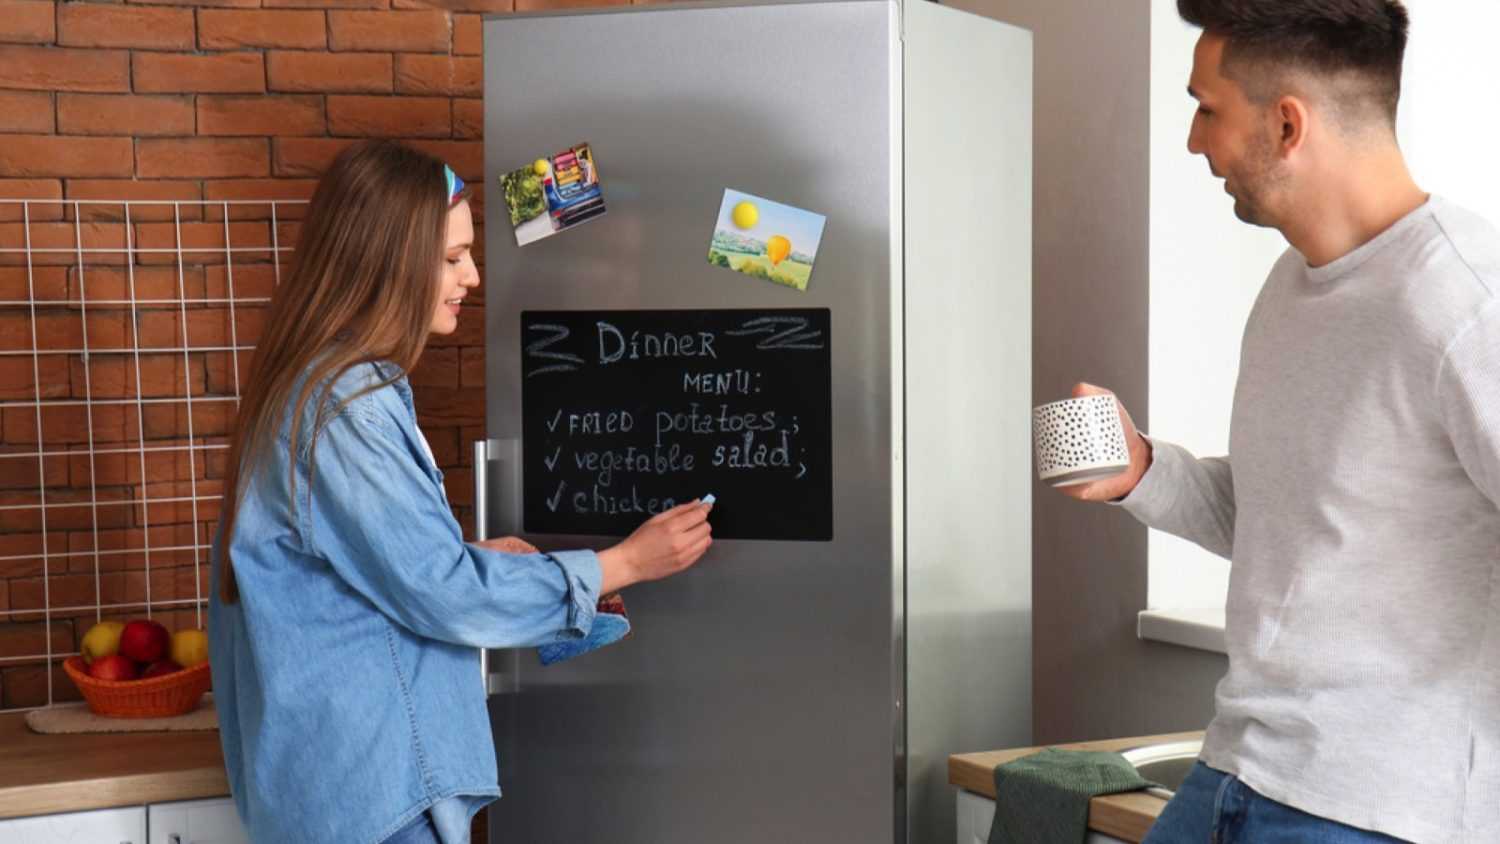 Woman writing in Chalkboard refrigerator